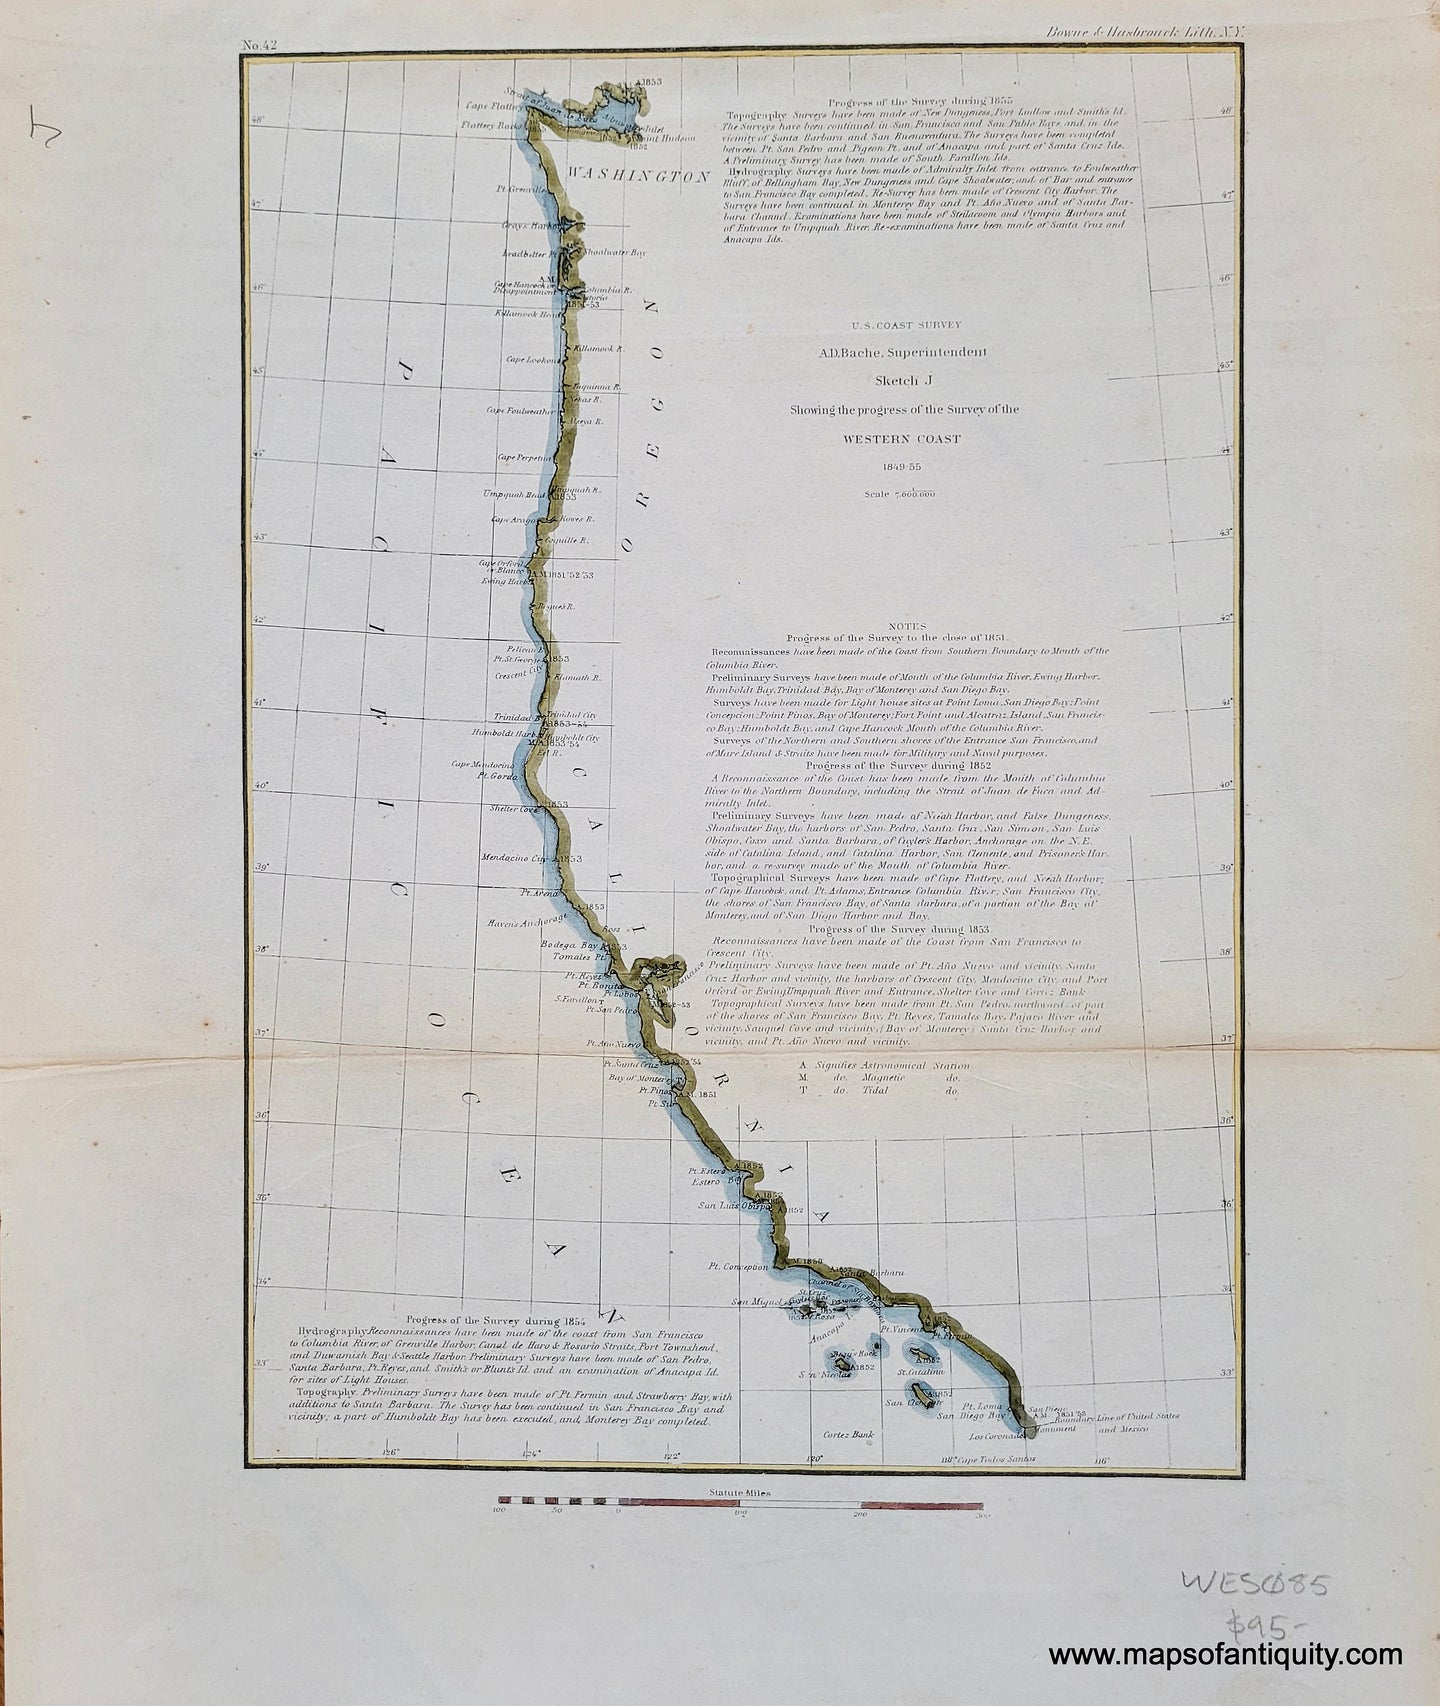 Hand-Colored-Antique-Coastal-Chart-Sketch-J-Showing-the-progress-of-the-Survey-of-the-Western-Coast**********-United-States-West-1855-U.S.-Coast-Survey